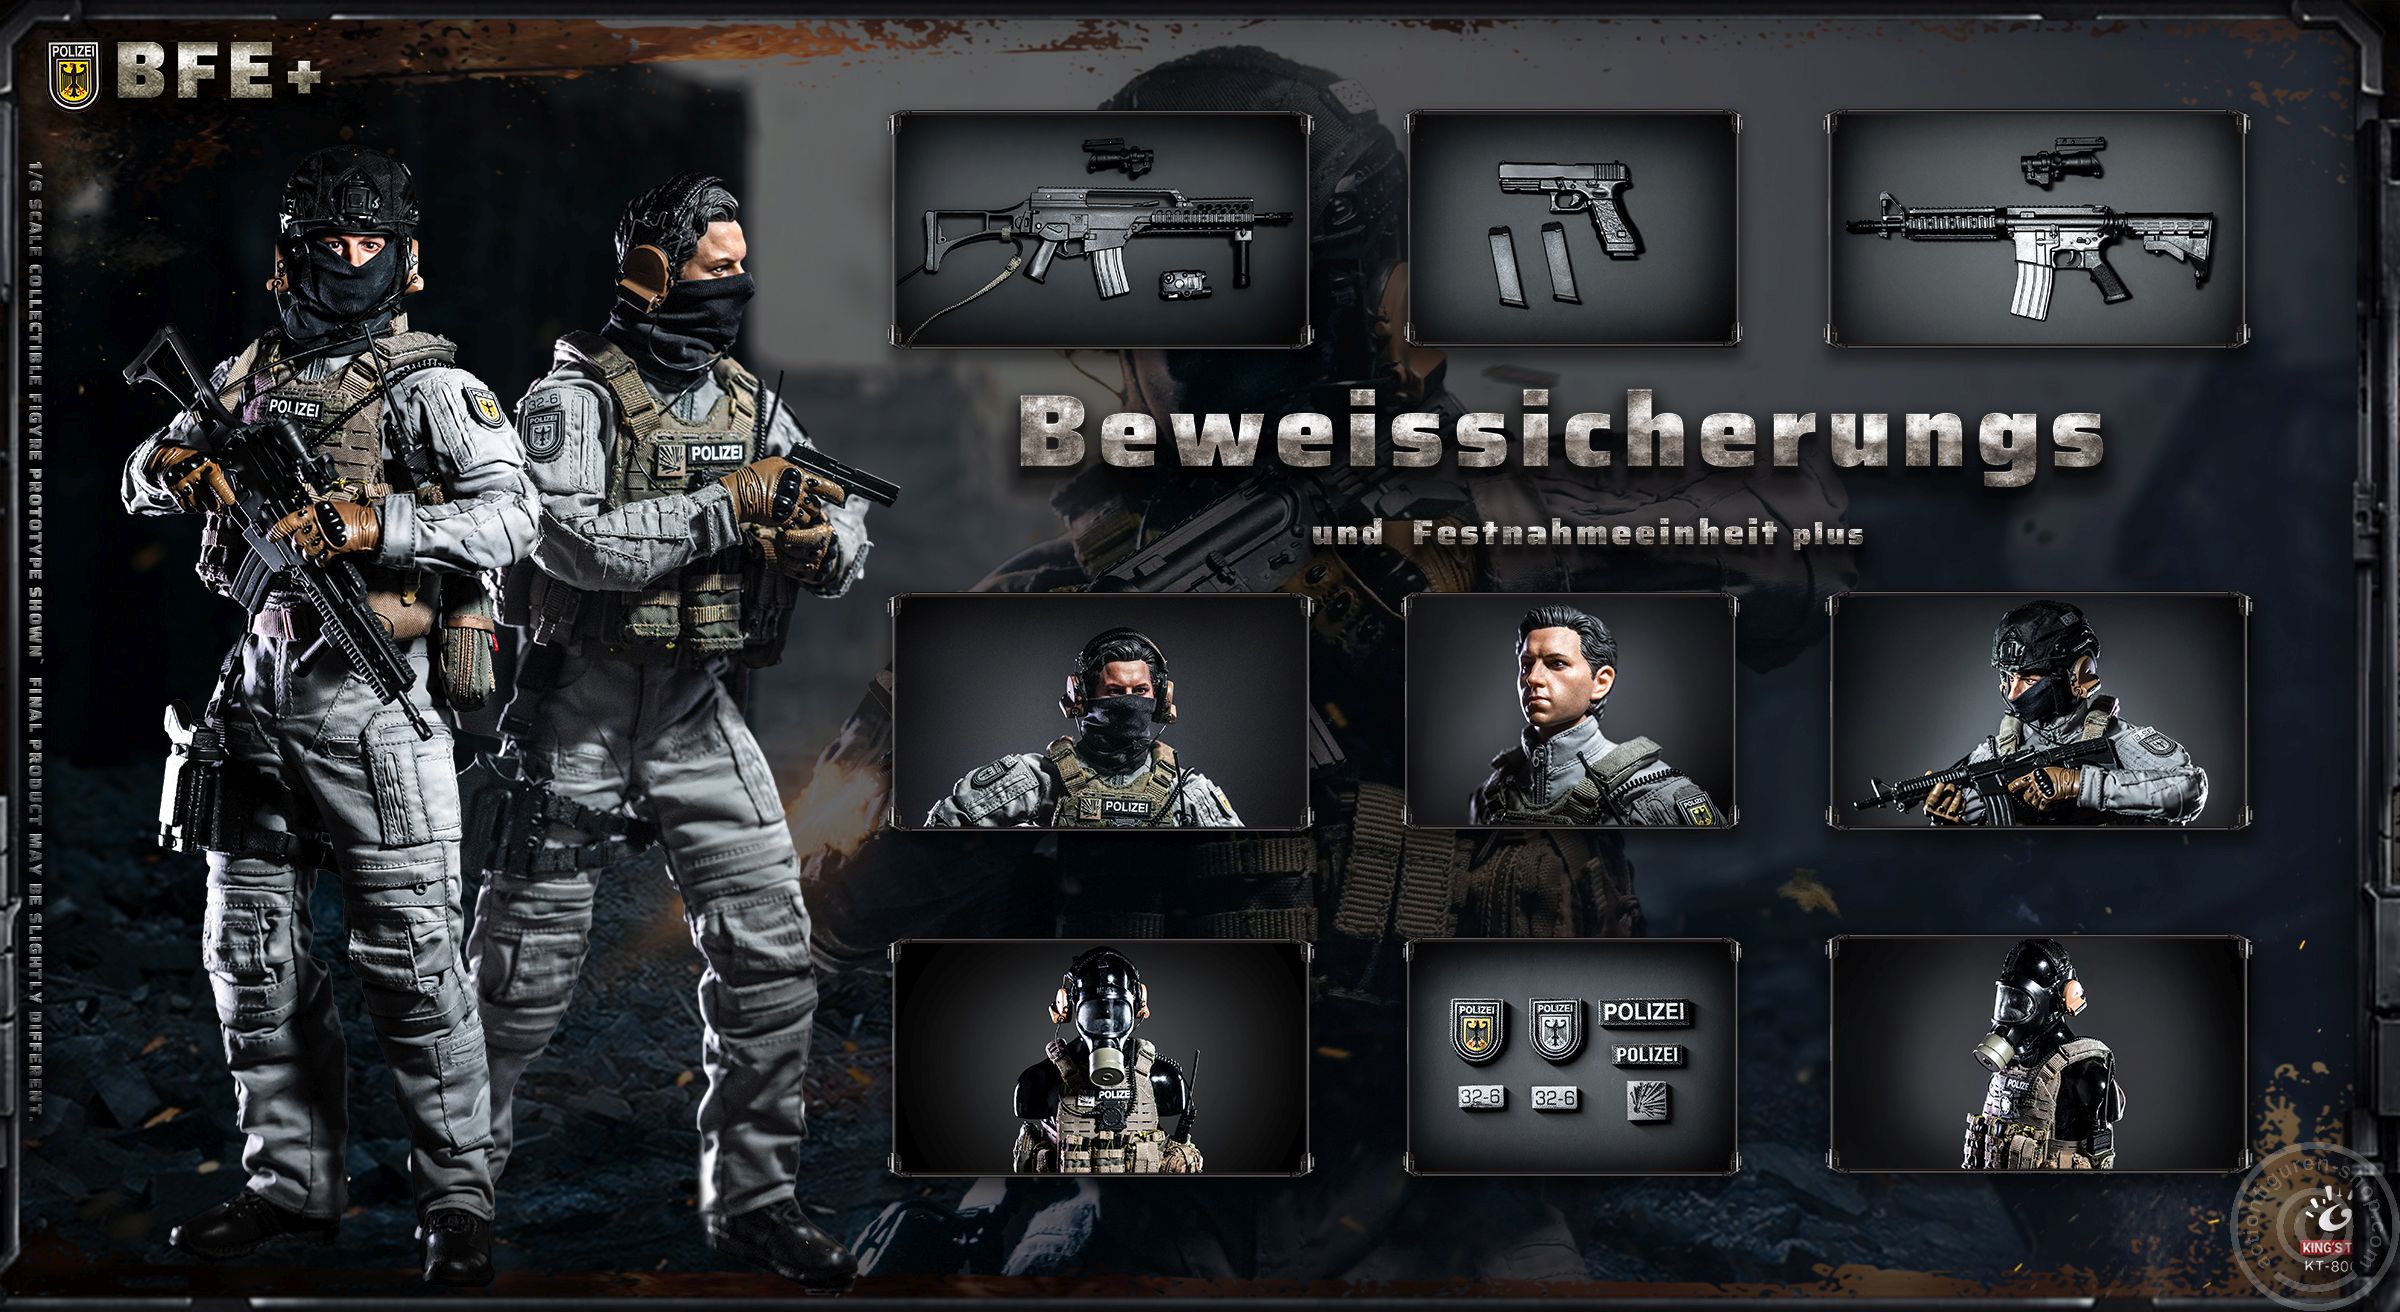 BFE+ - German Anti Terrorist Special Operation Commando